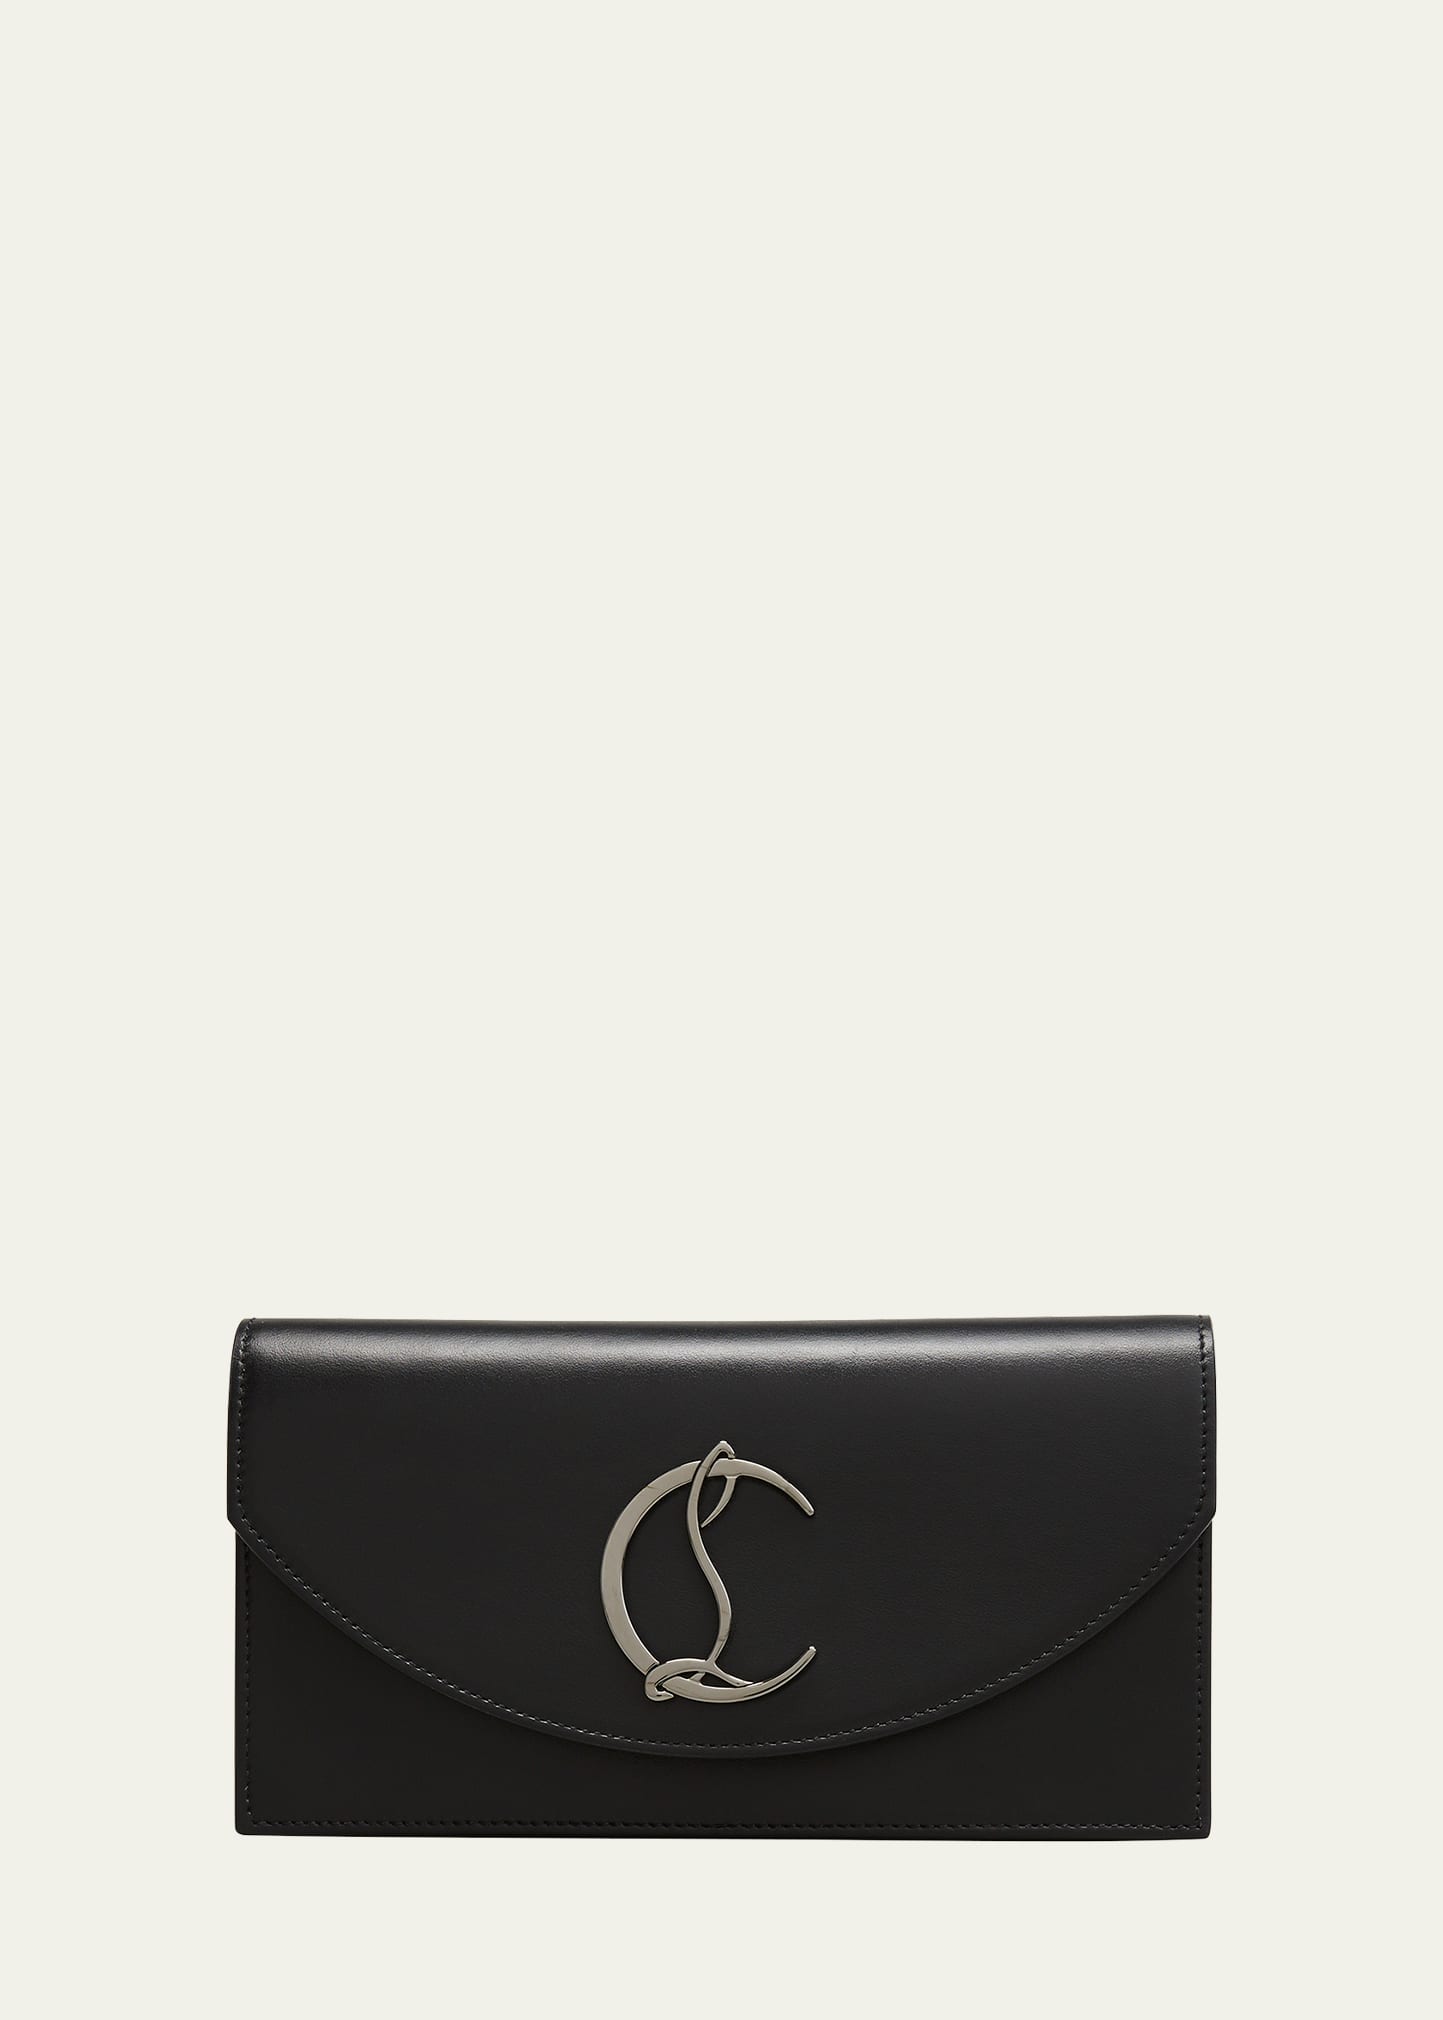 Christian Louboutin Loubi54 Calf Leather Clutch Shoulder Bag In Black/gunmetal